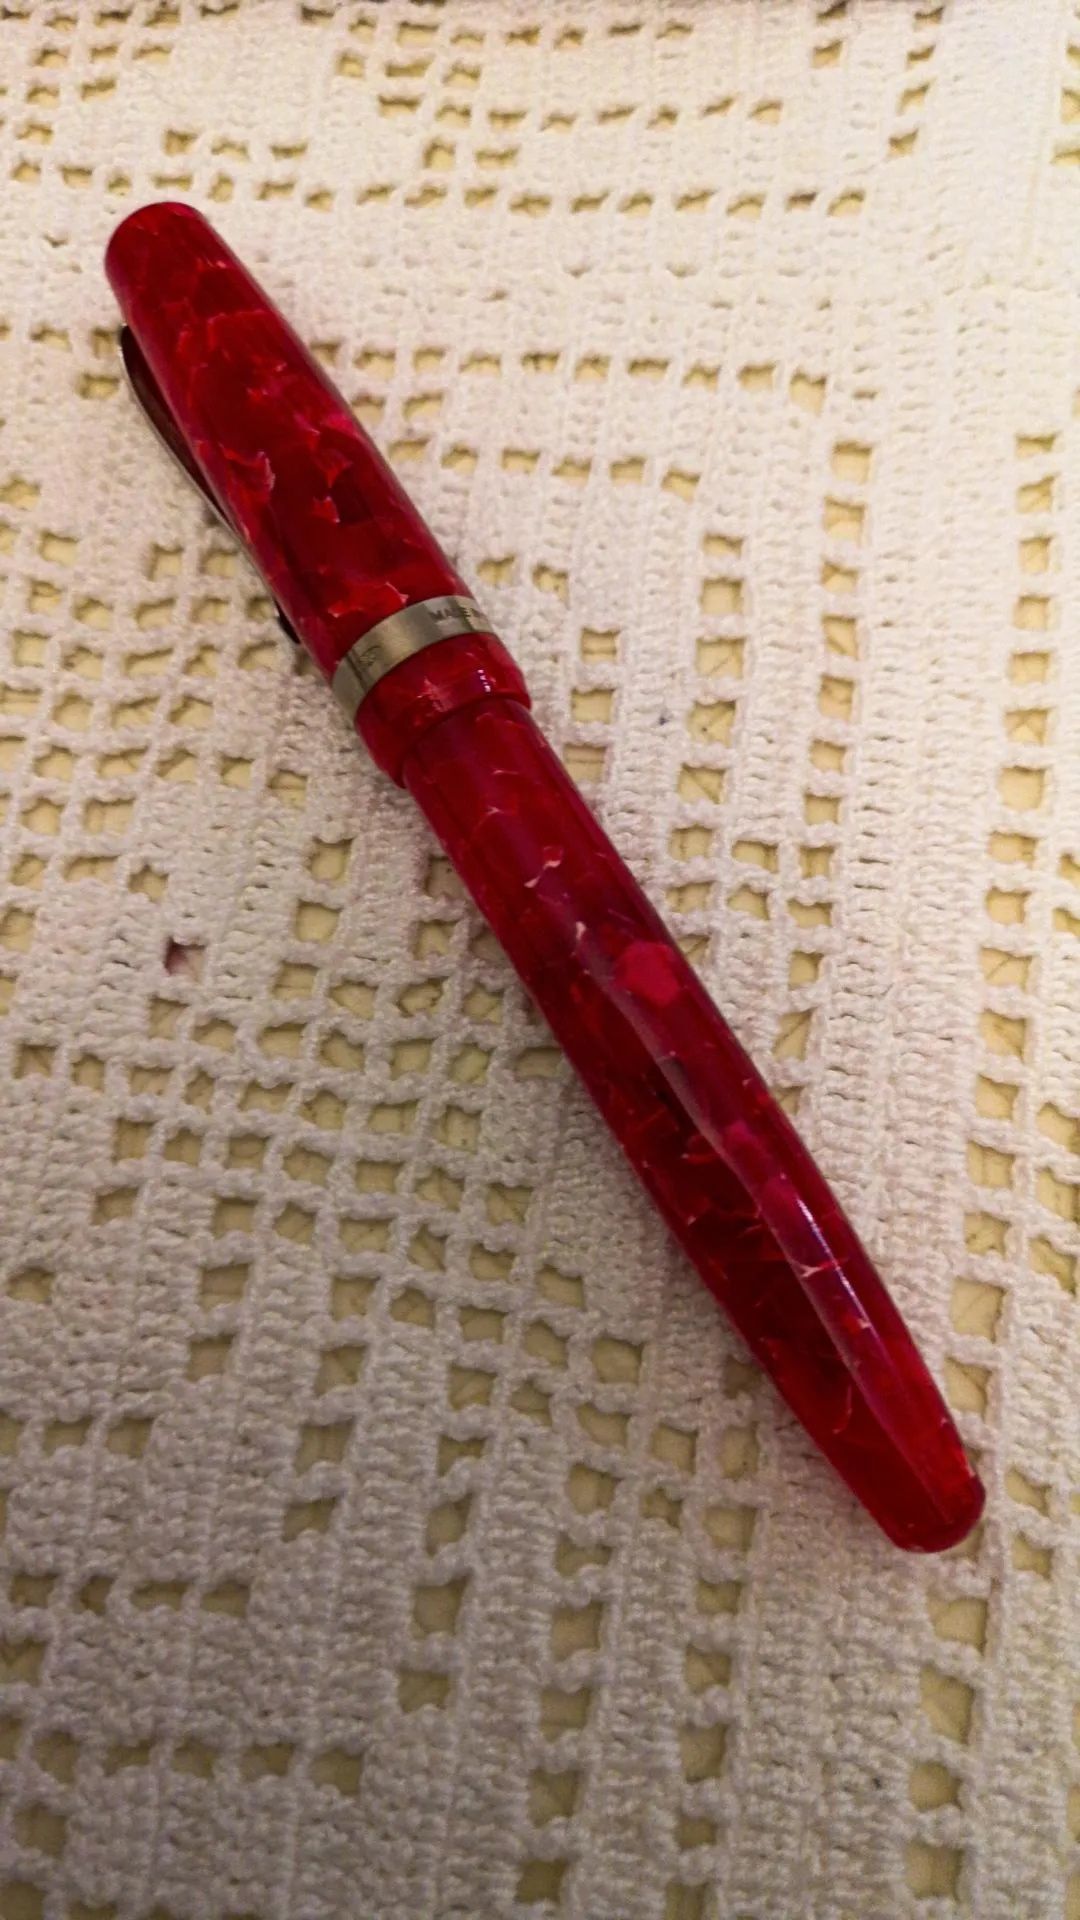 Lalex fountain pen Original